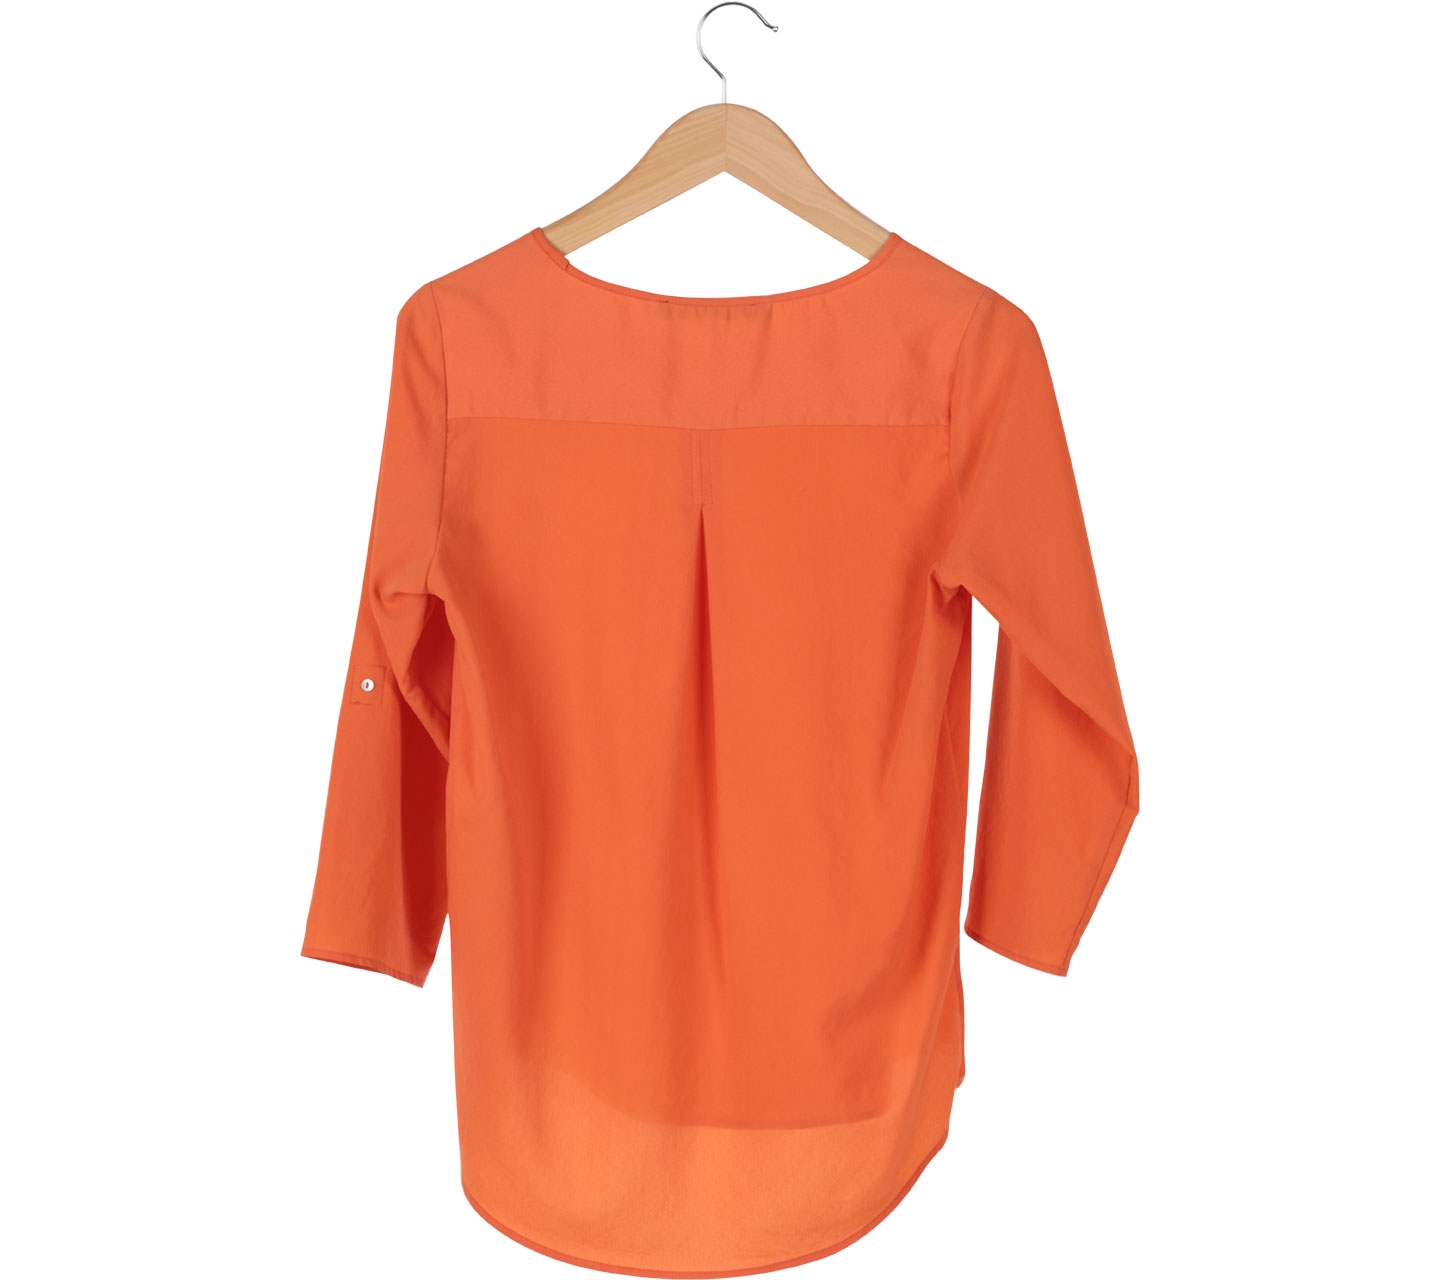 Zara Orange Basic Blouse